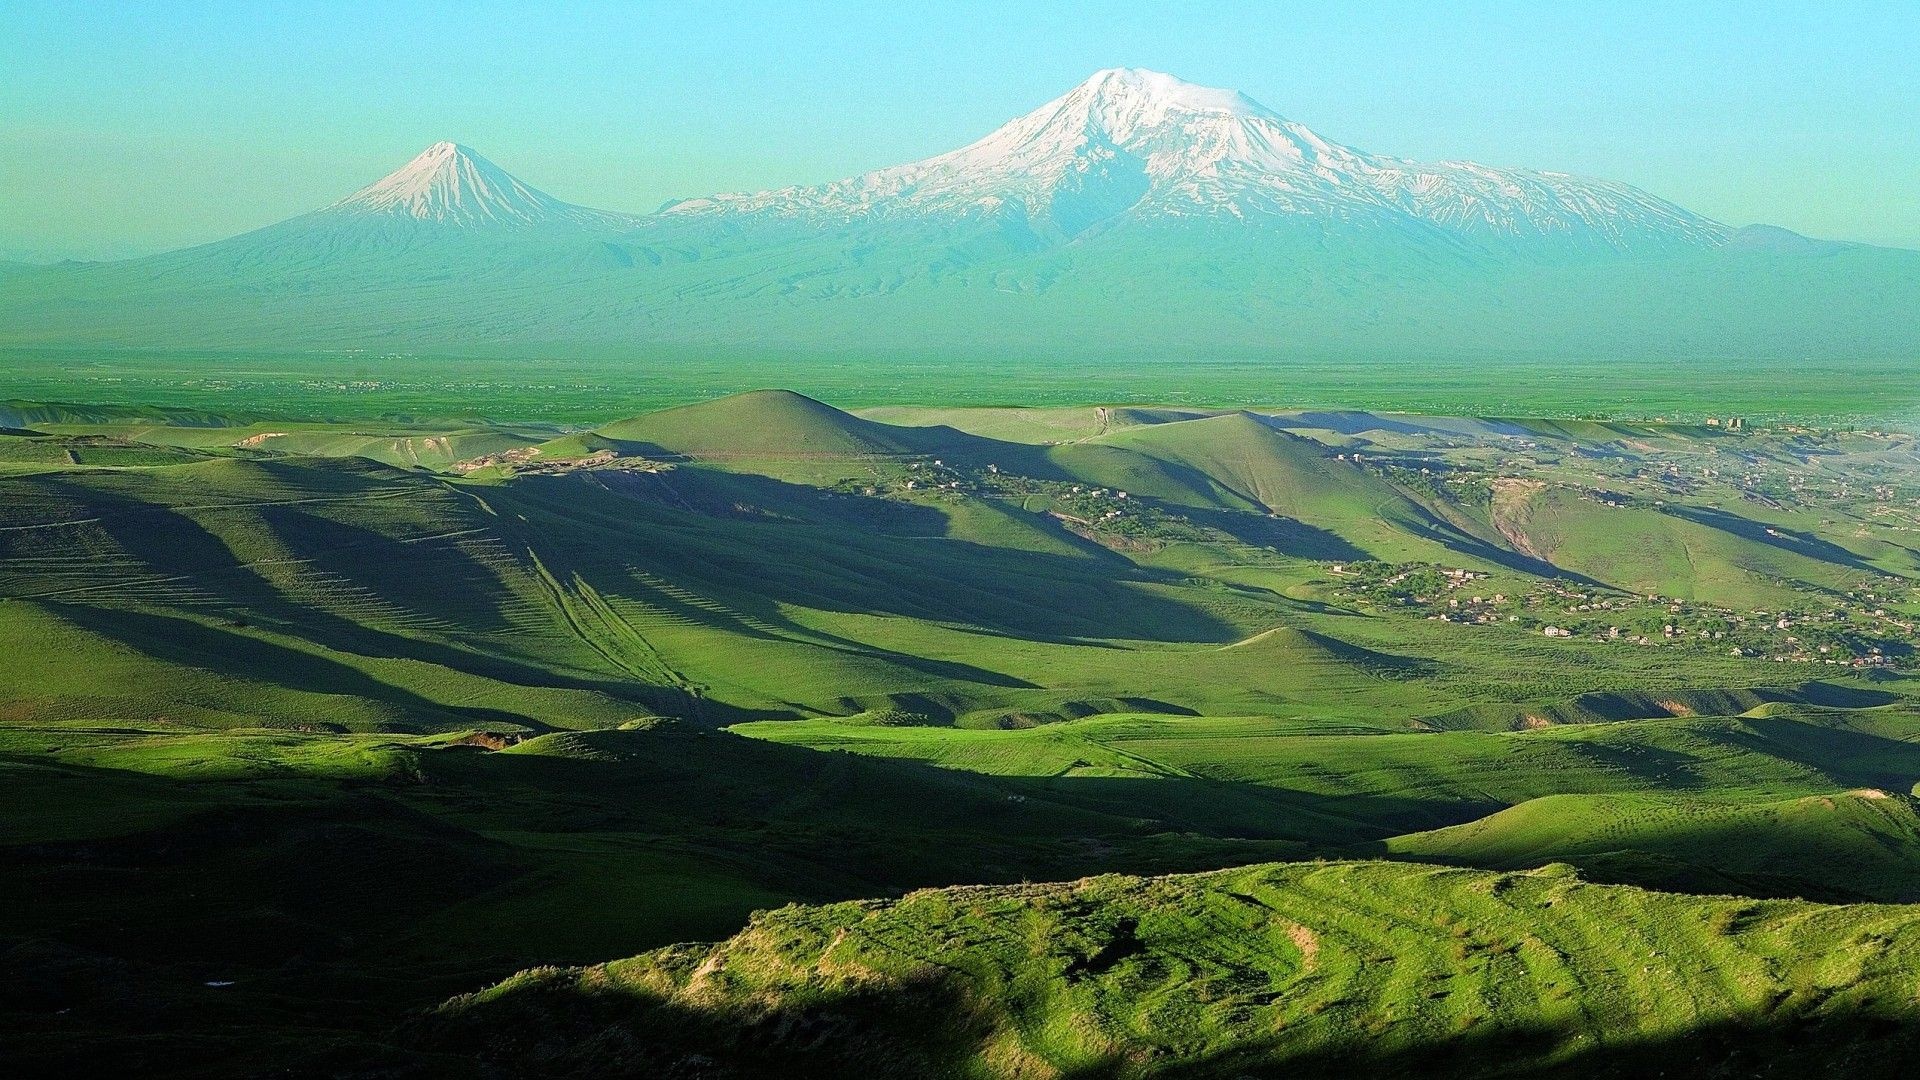 Armenia: A landlocked country in the geopolitical Transcaucasus region. 1920x1080 Full HD Wallpaper.